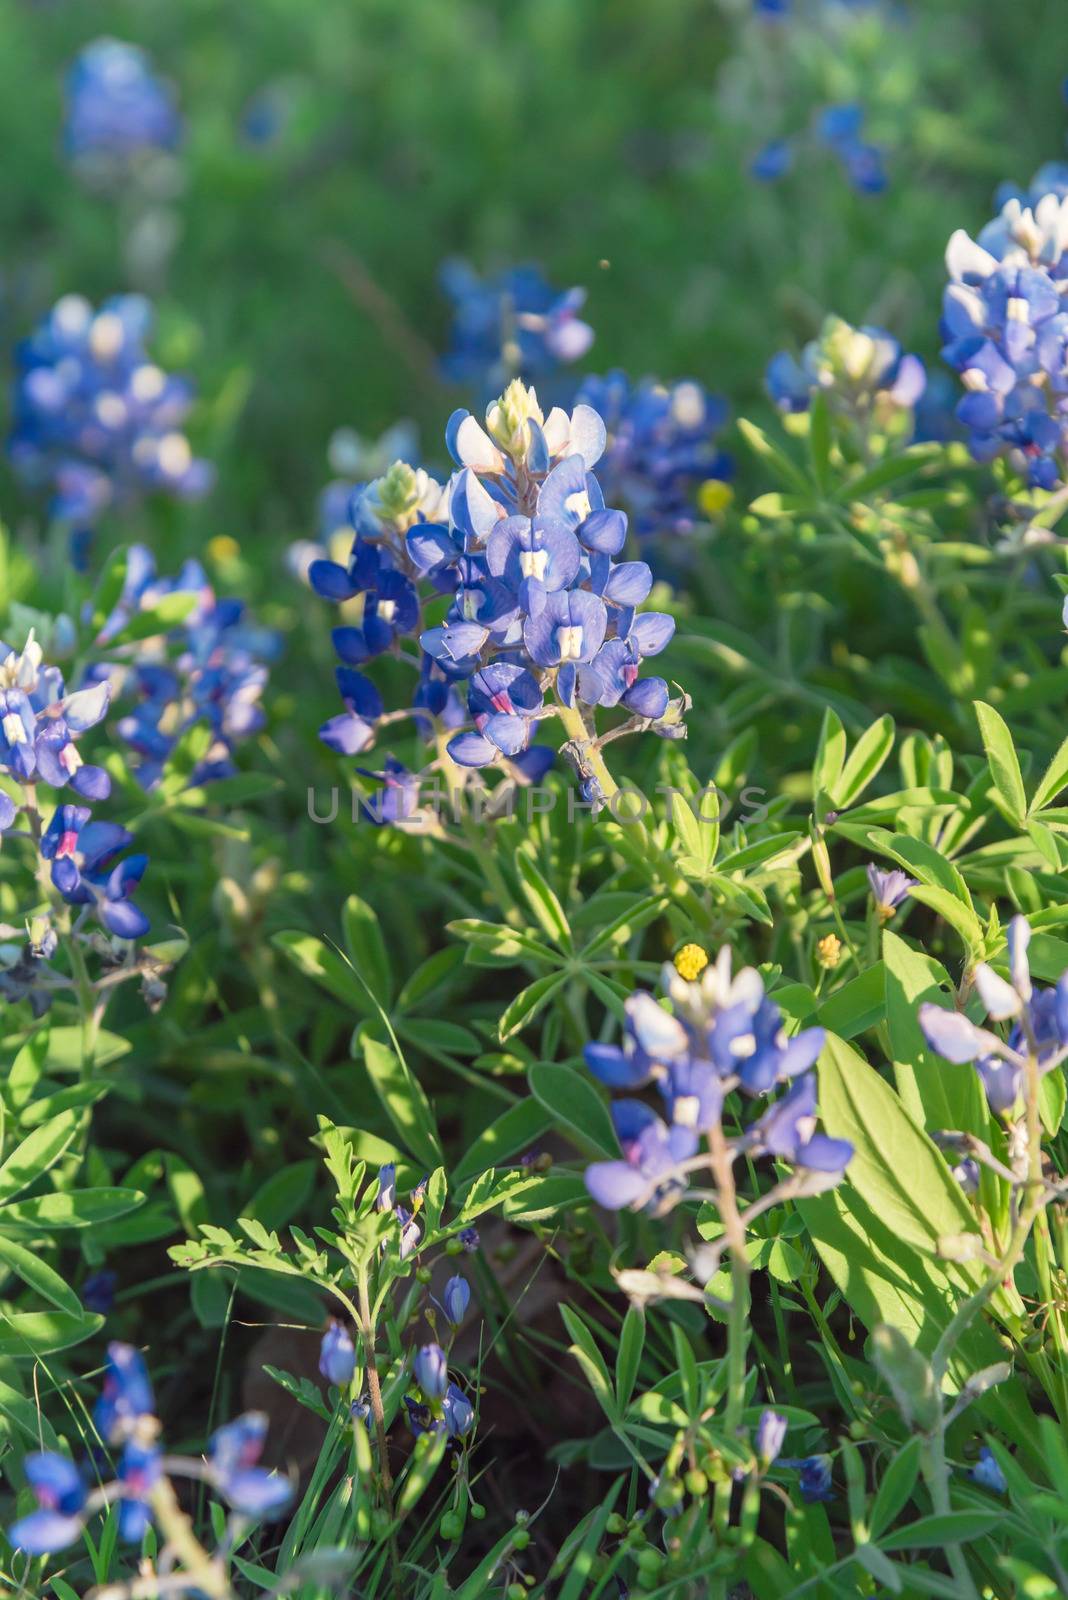 Blooming Bluebonnet wildflower at springtime near Dallas, Texas by trongnguyen